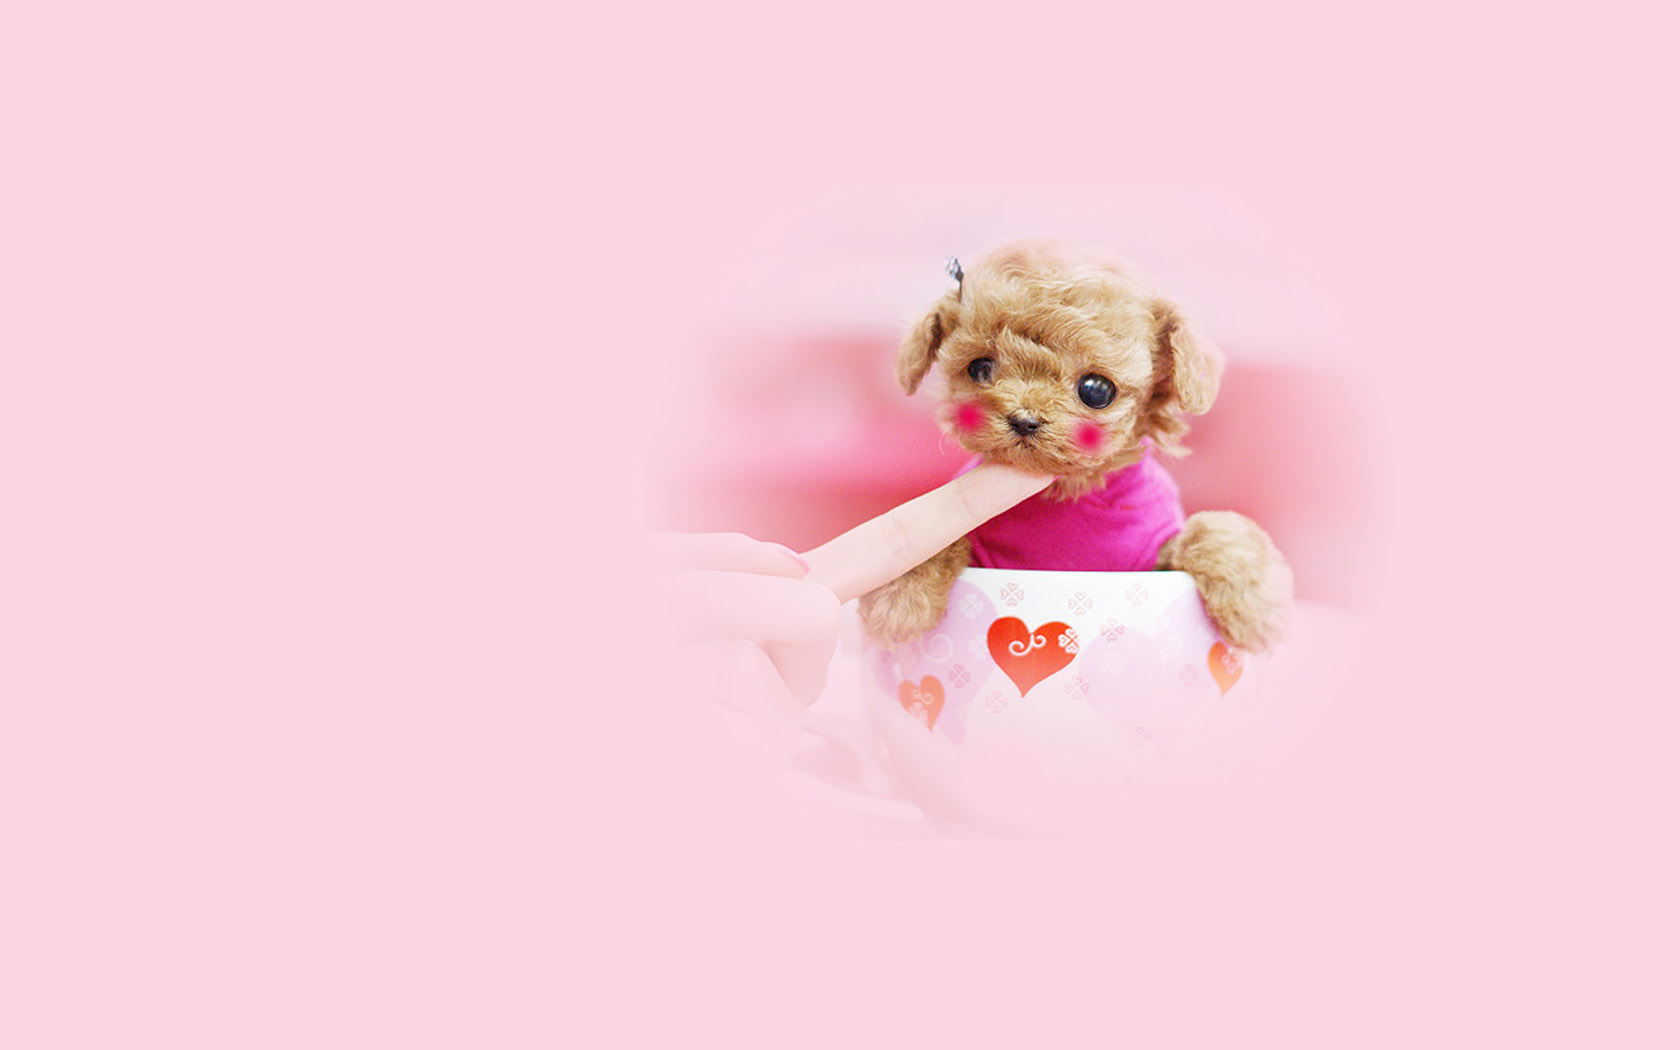 Cute teacup dog desktop background picture